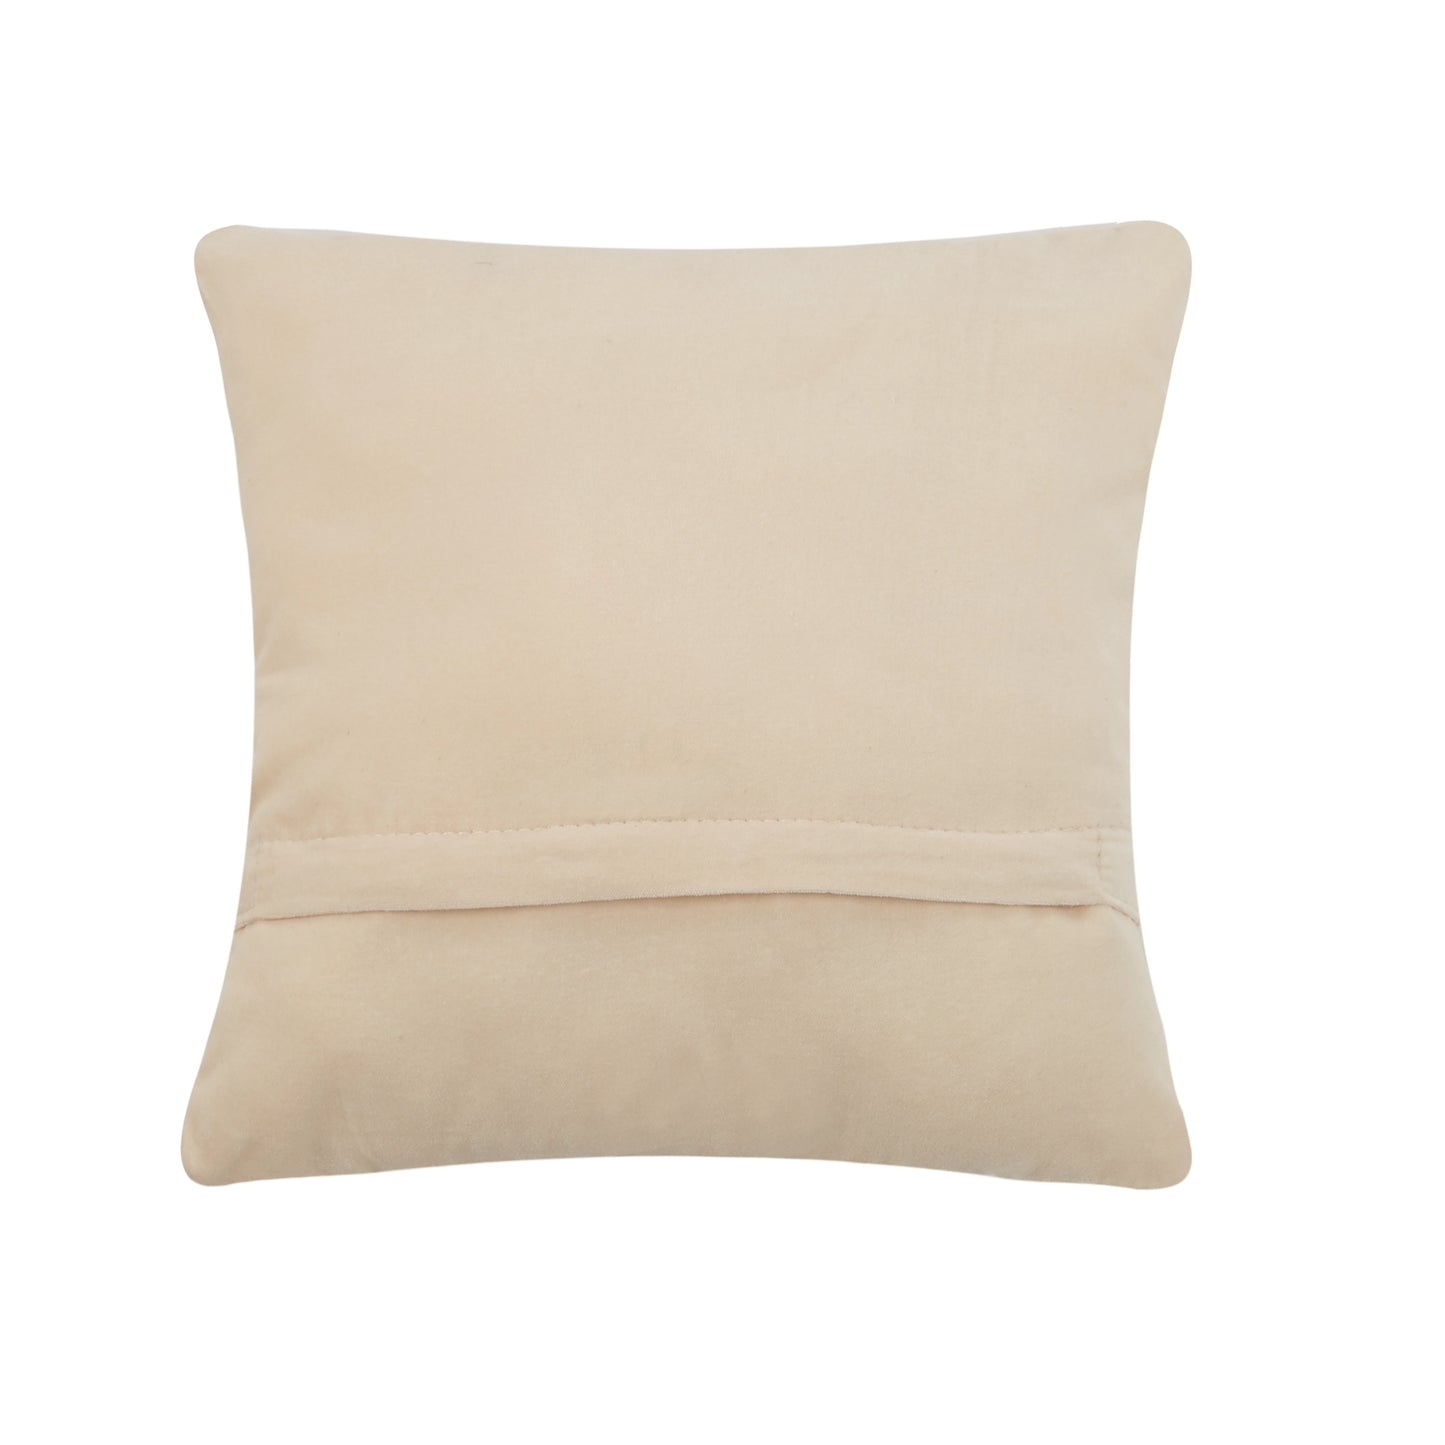 Nutcracker Hooked Decorative Pillow